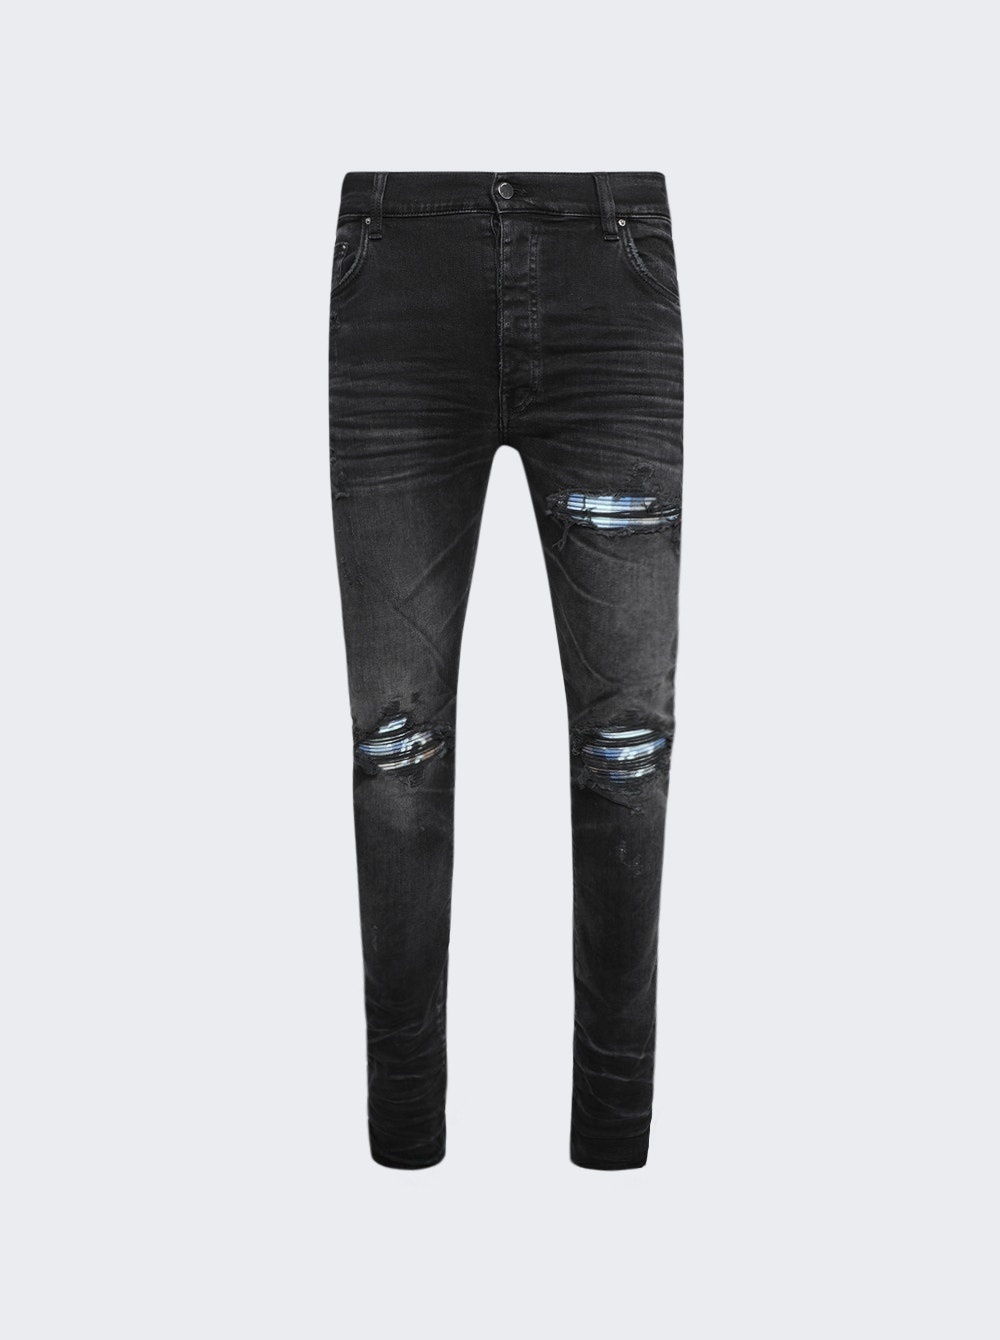 Mx1 Plaid Jeans Faded Black - 1